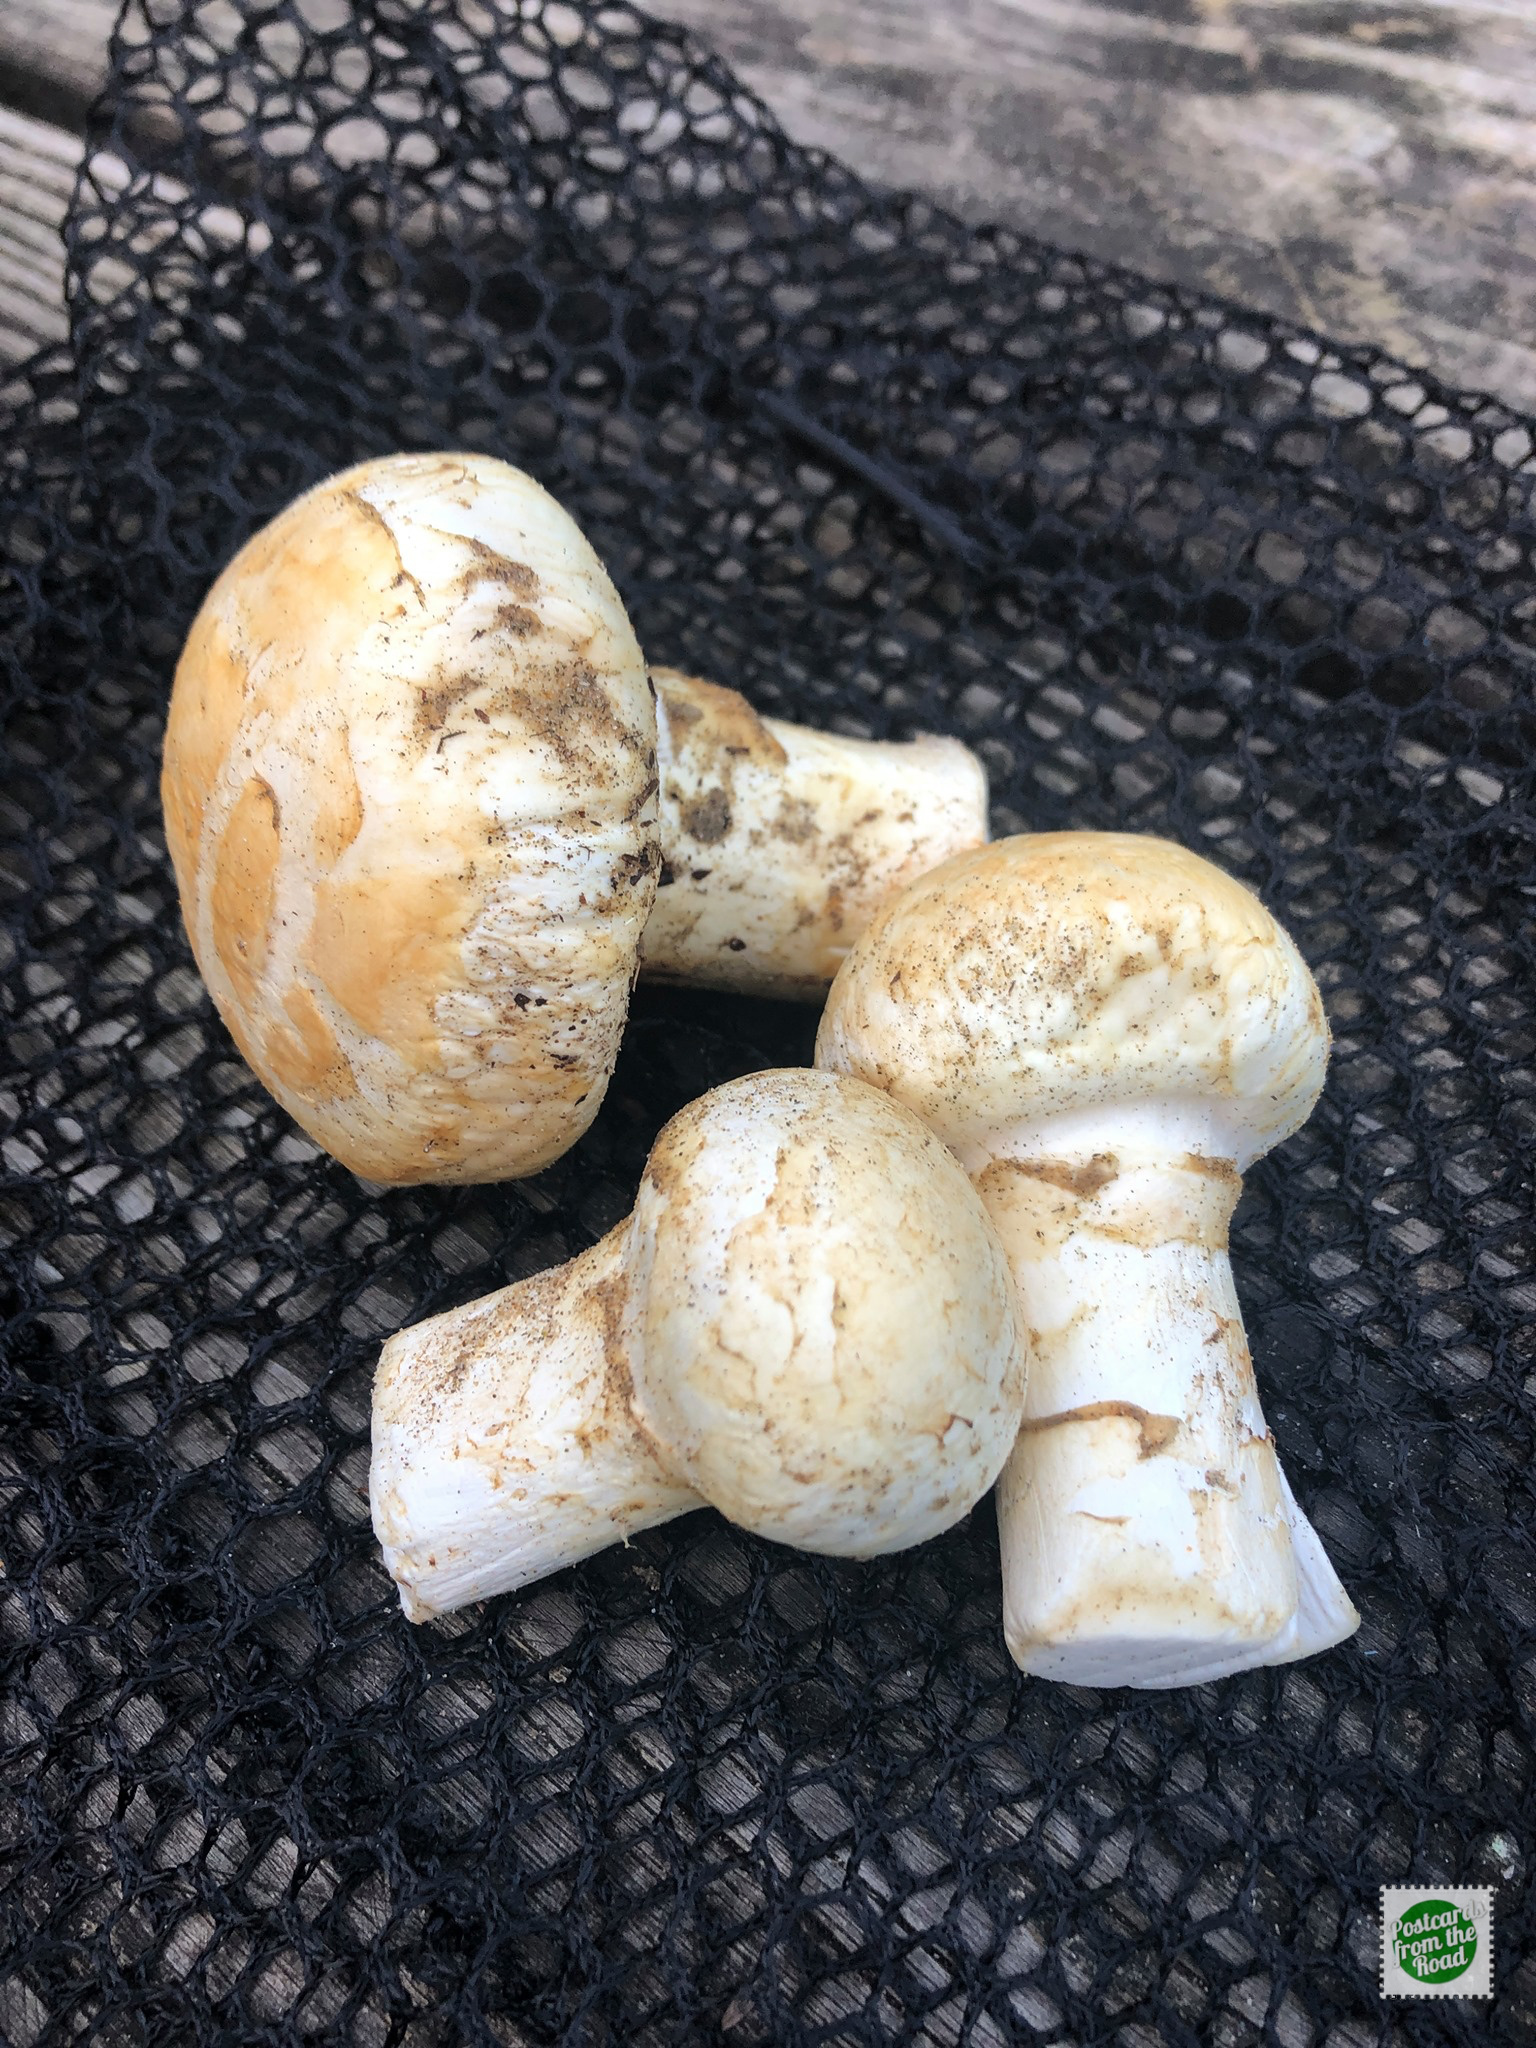 Matsutake mushrooms found near the campground.